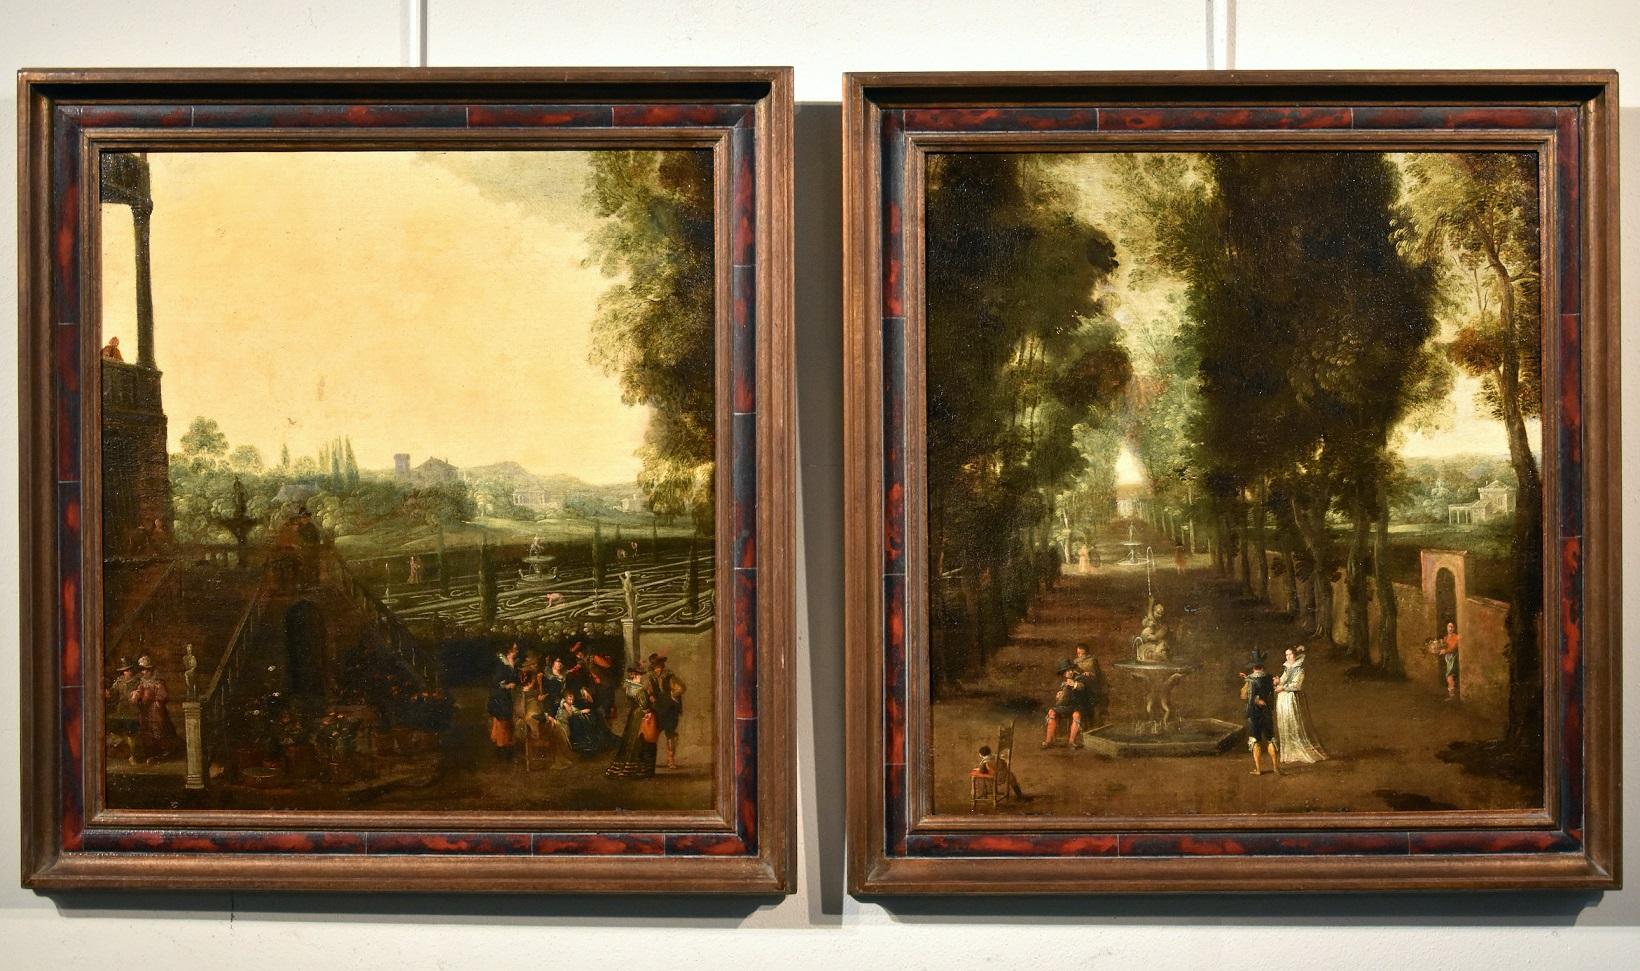 De Moucheron Pair Of Gardens Paint Old master Oil on canvas 17/18th Century Art - Painting by Isaac de Moucheron (Amsterdam 1667 - 1744)